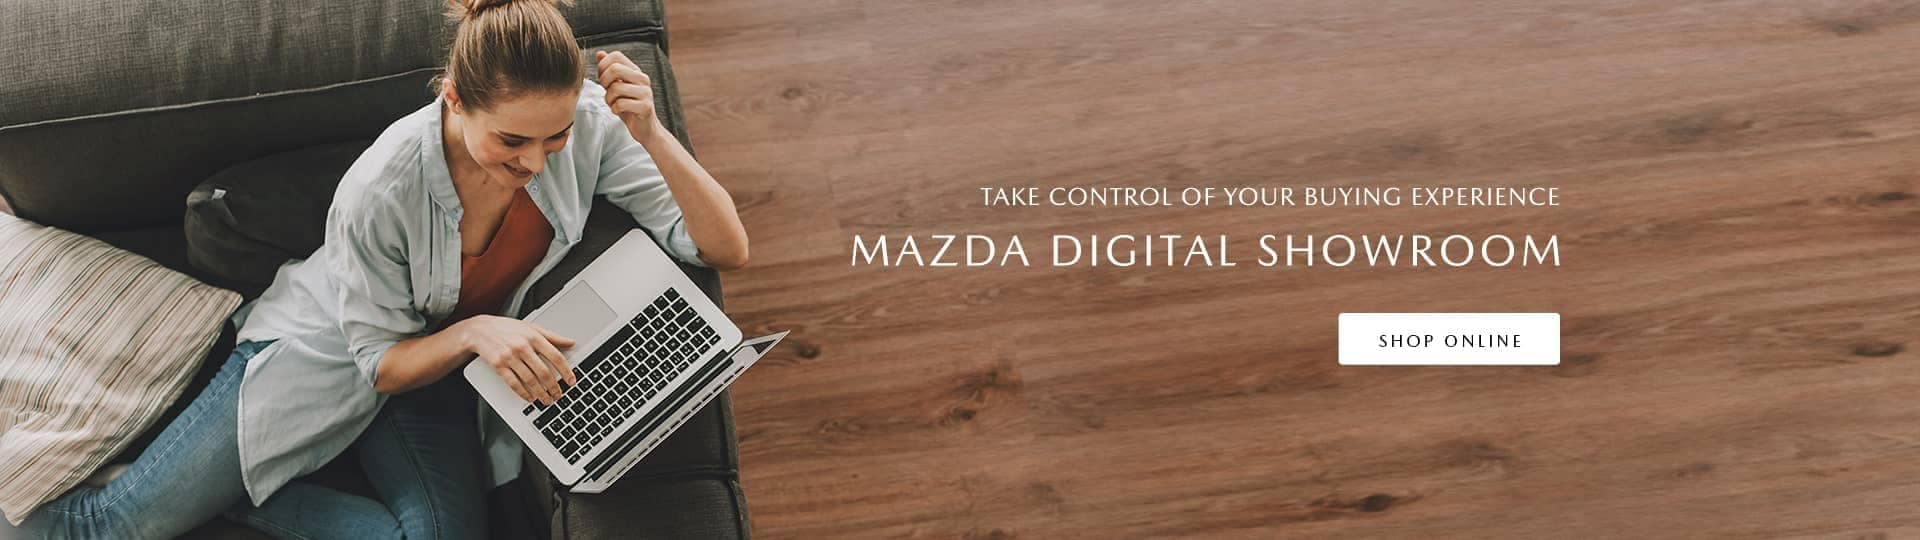 Mazda Digital showroom, shop from home